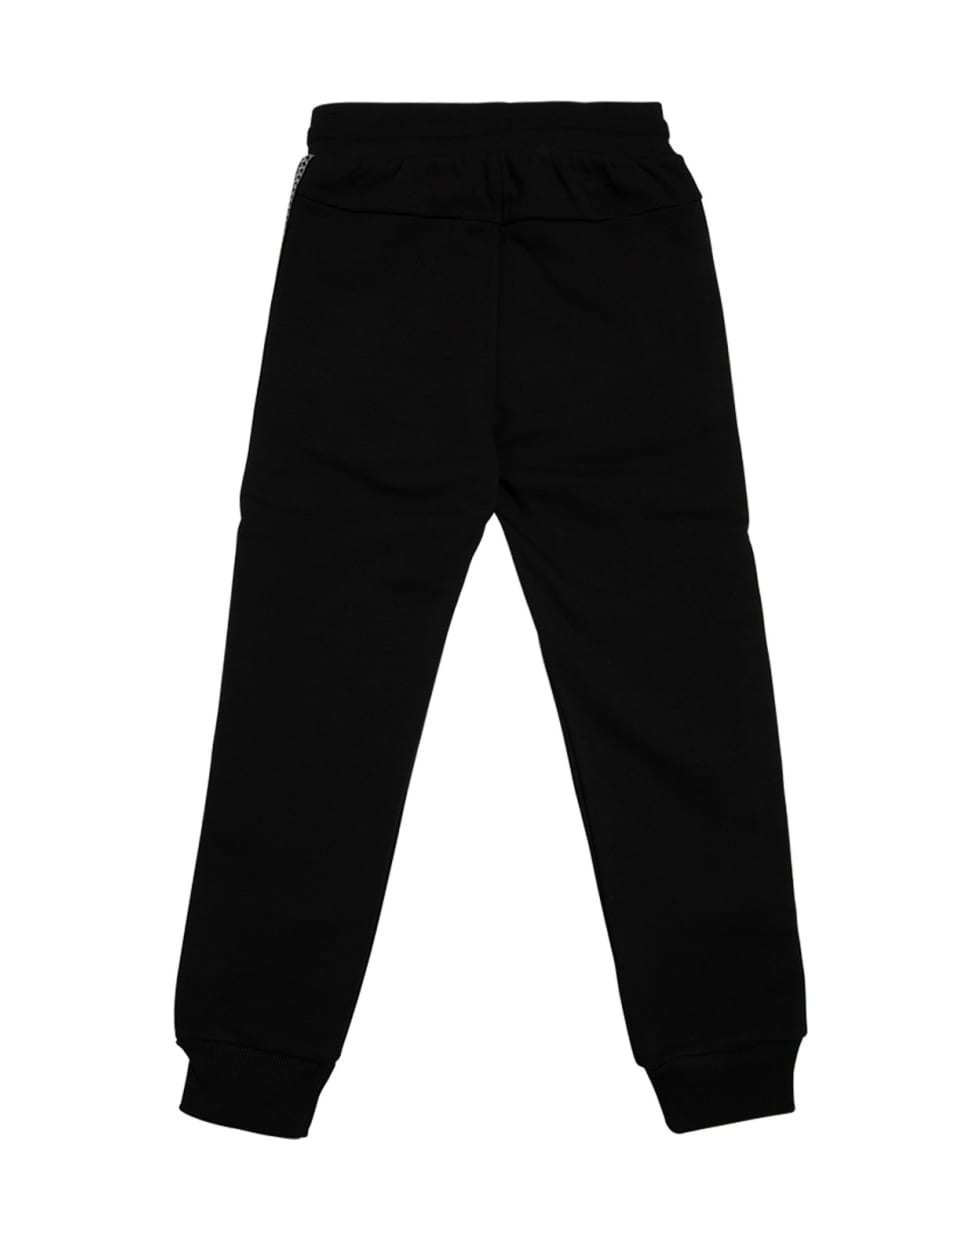 Givenchy Black Cotton Blend Joggers - Black